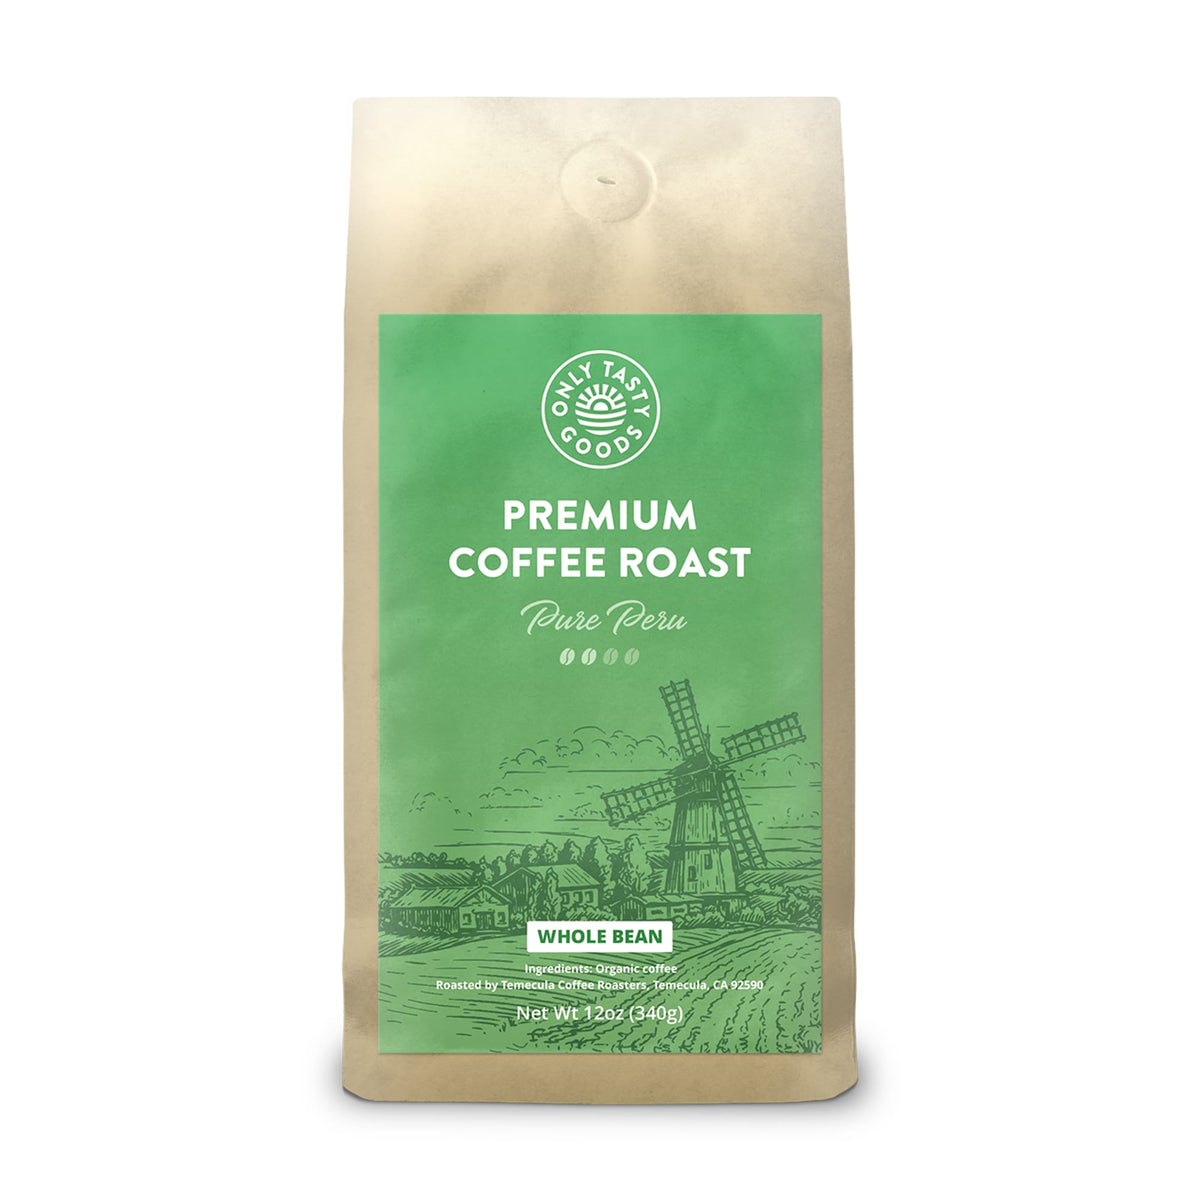 Premium Coffee Roast - Pure Peru - Fair Trade and Organic Coffee, Low Acidity Whole Bean